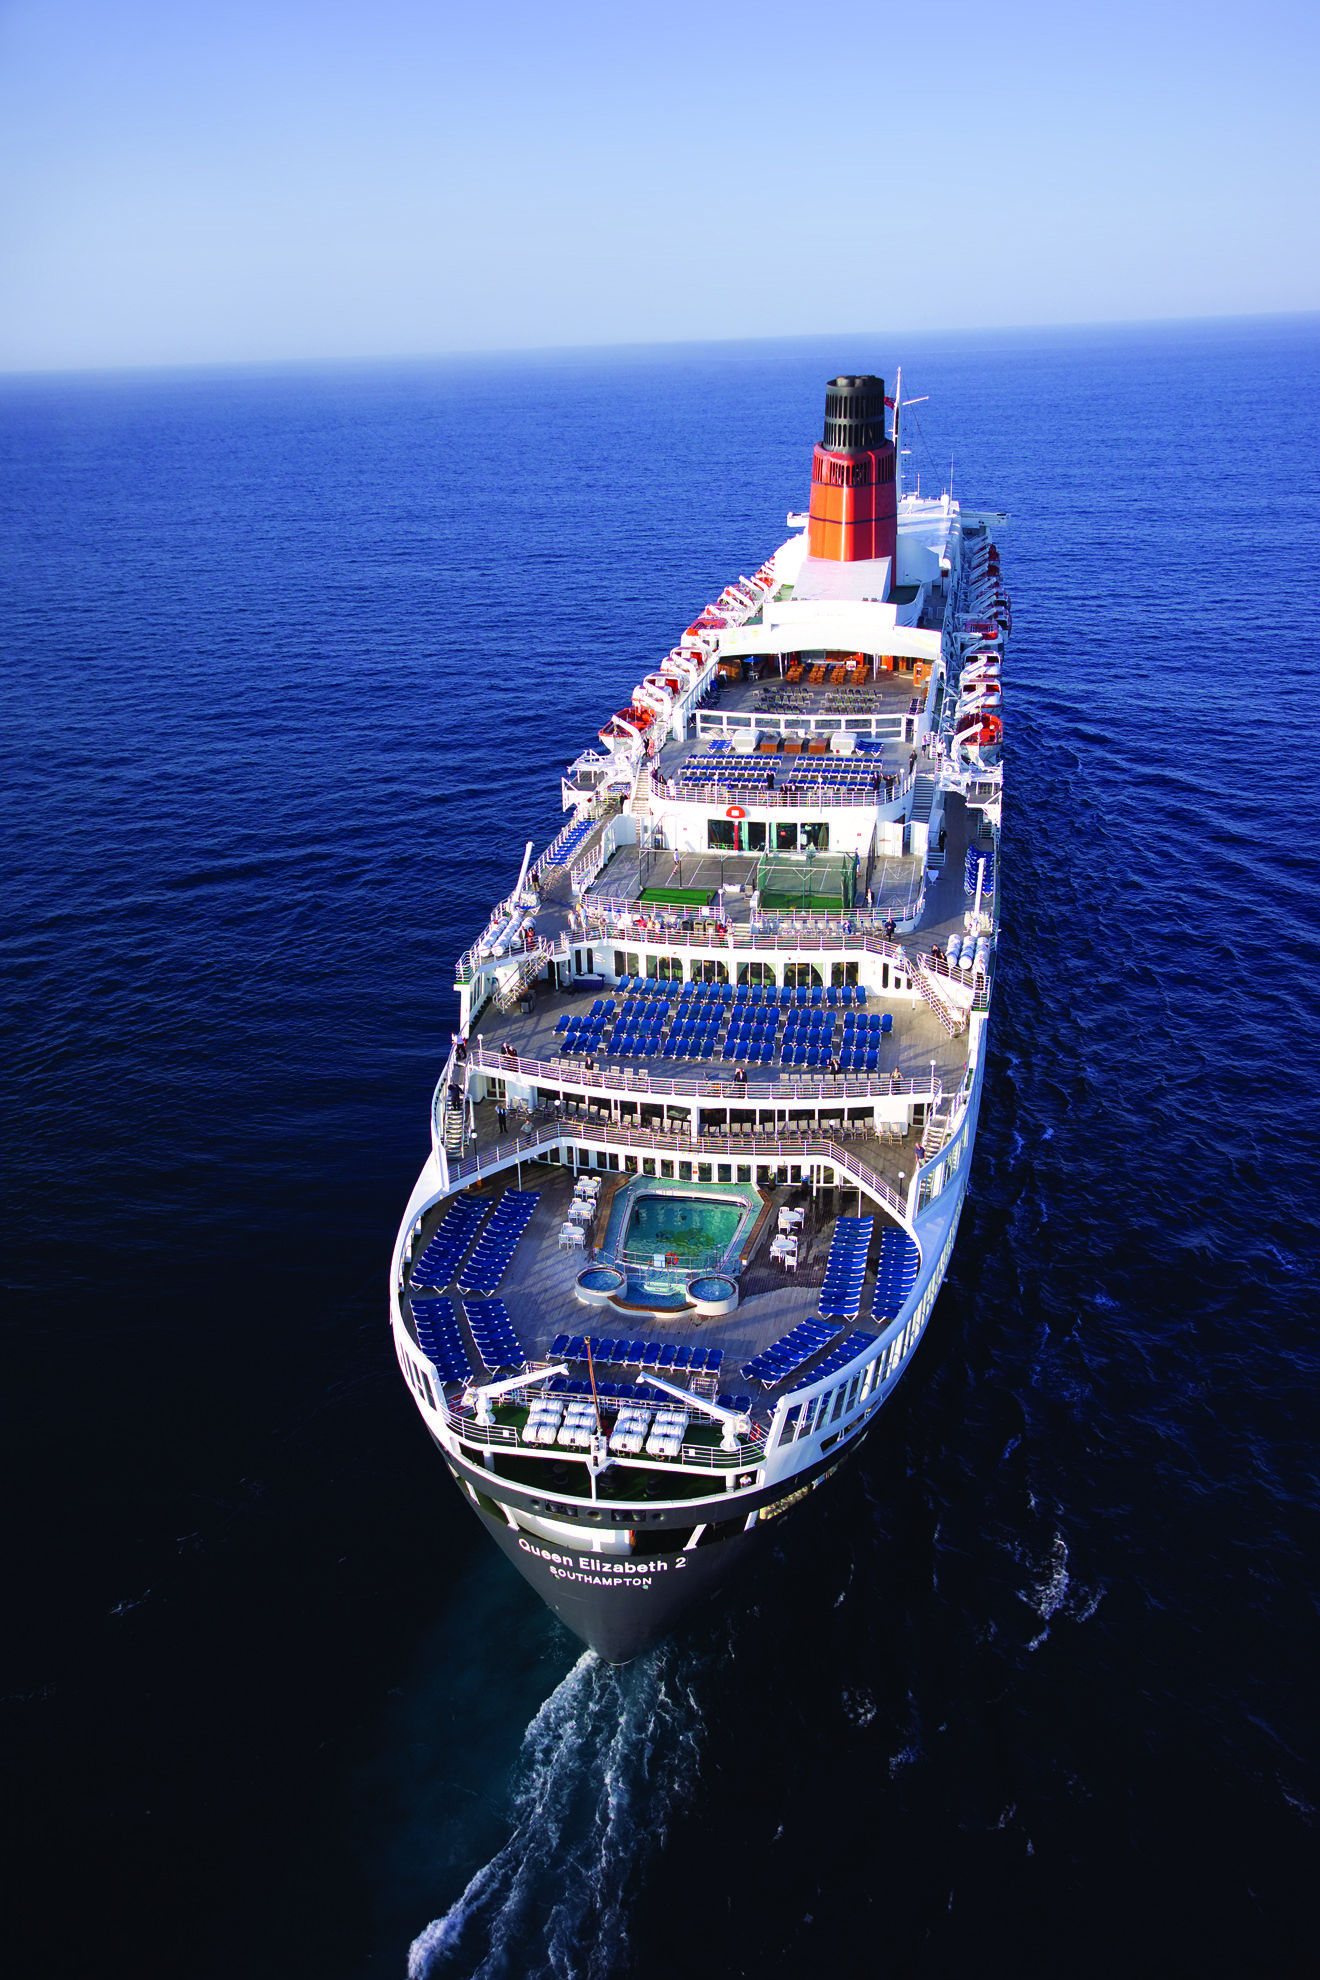 QE2 at sea - Aft | QE2 cruise ship | Pinterest | Cruise ships ...